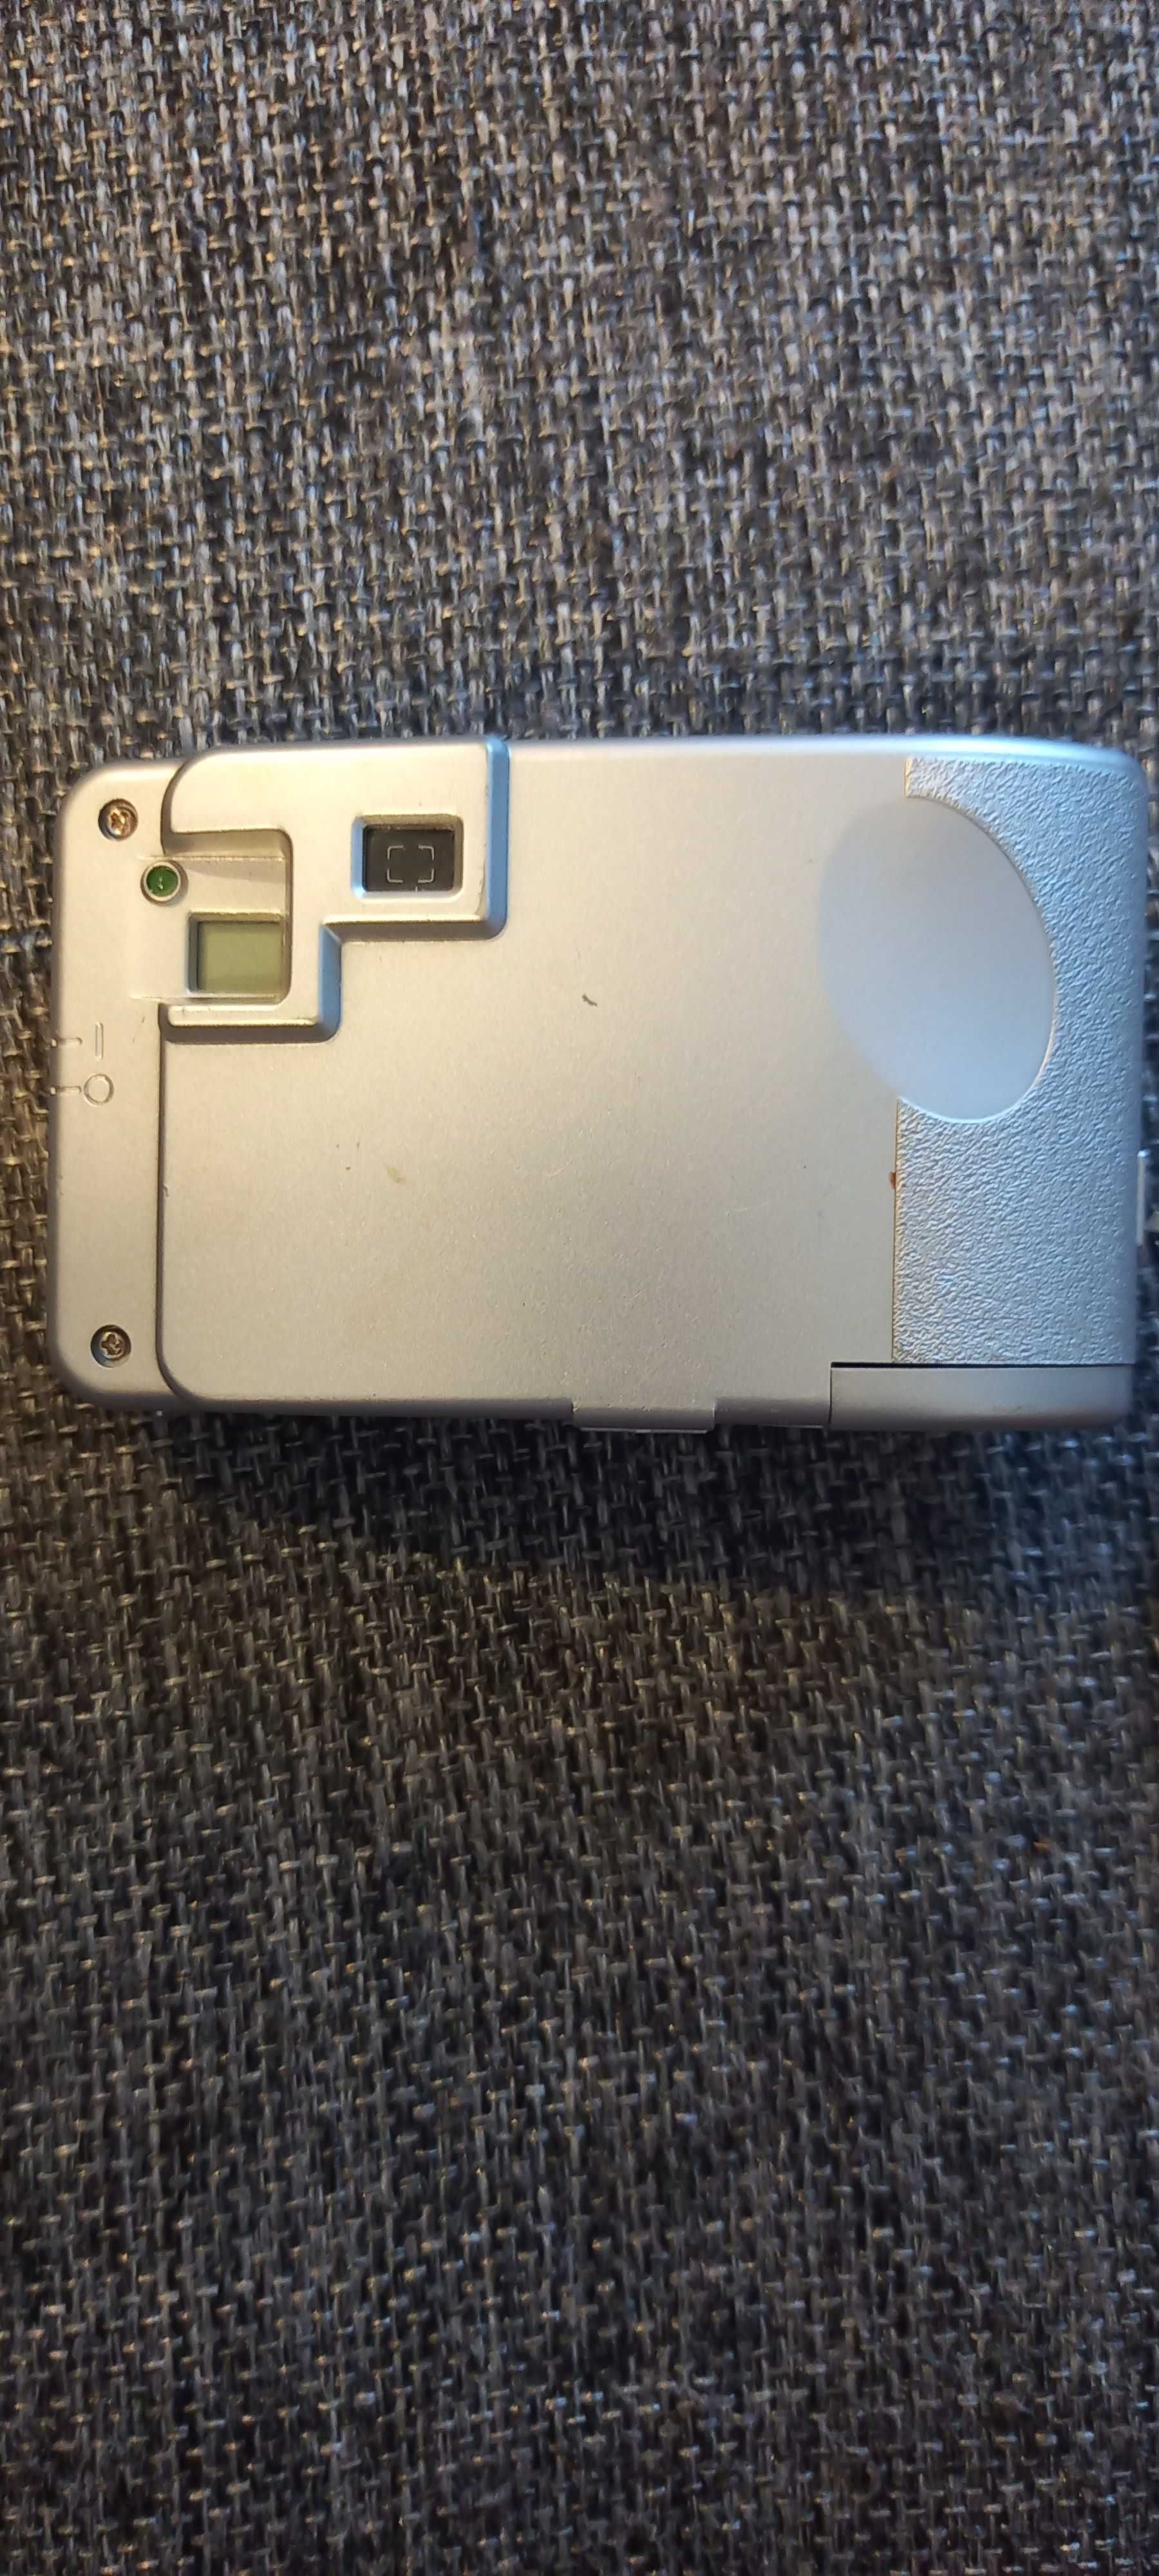 Polaroid  320 Digital Camera - Silver